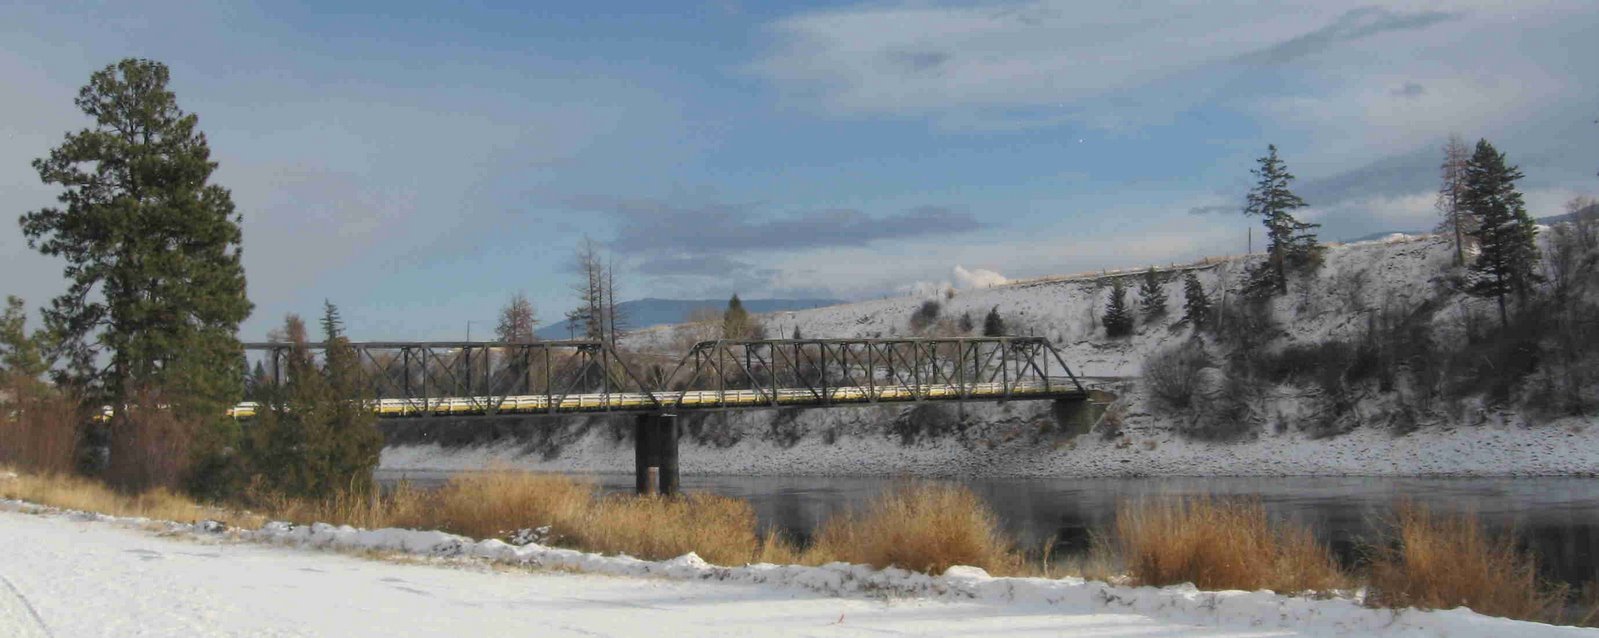 [Bridge+over+the+Thompson+at+Wallachin+January+2008.jpg]